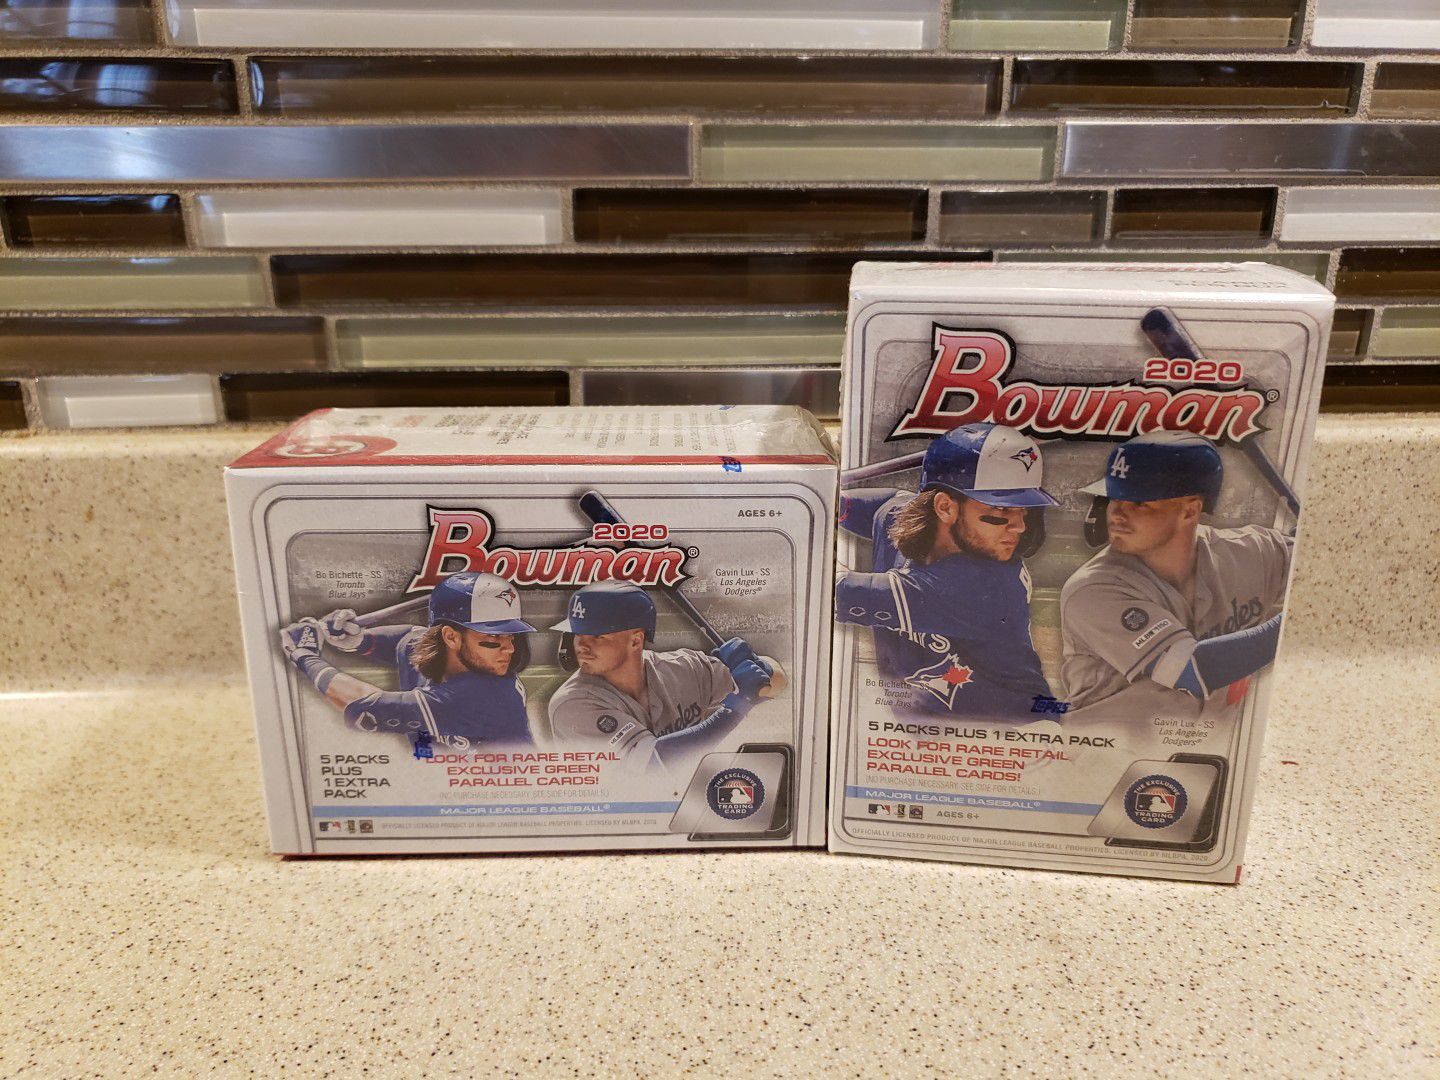 Topps Bowman baseball trading cards